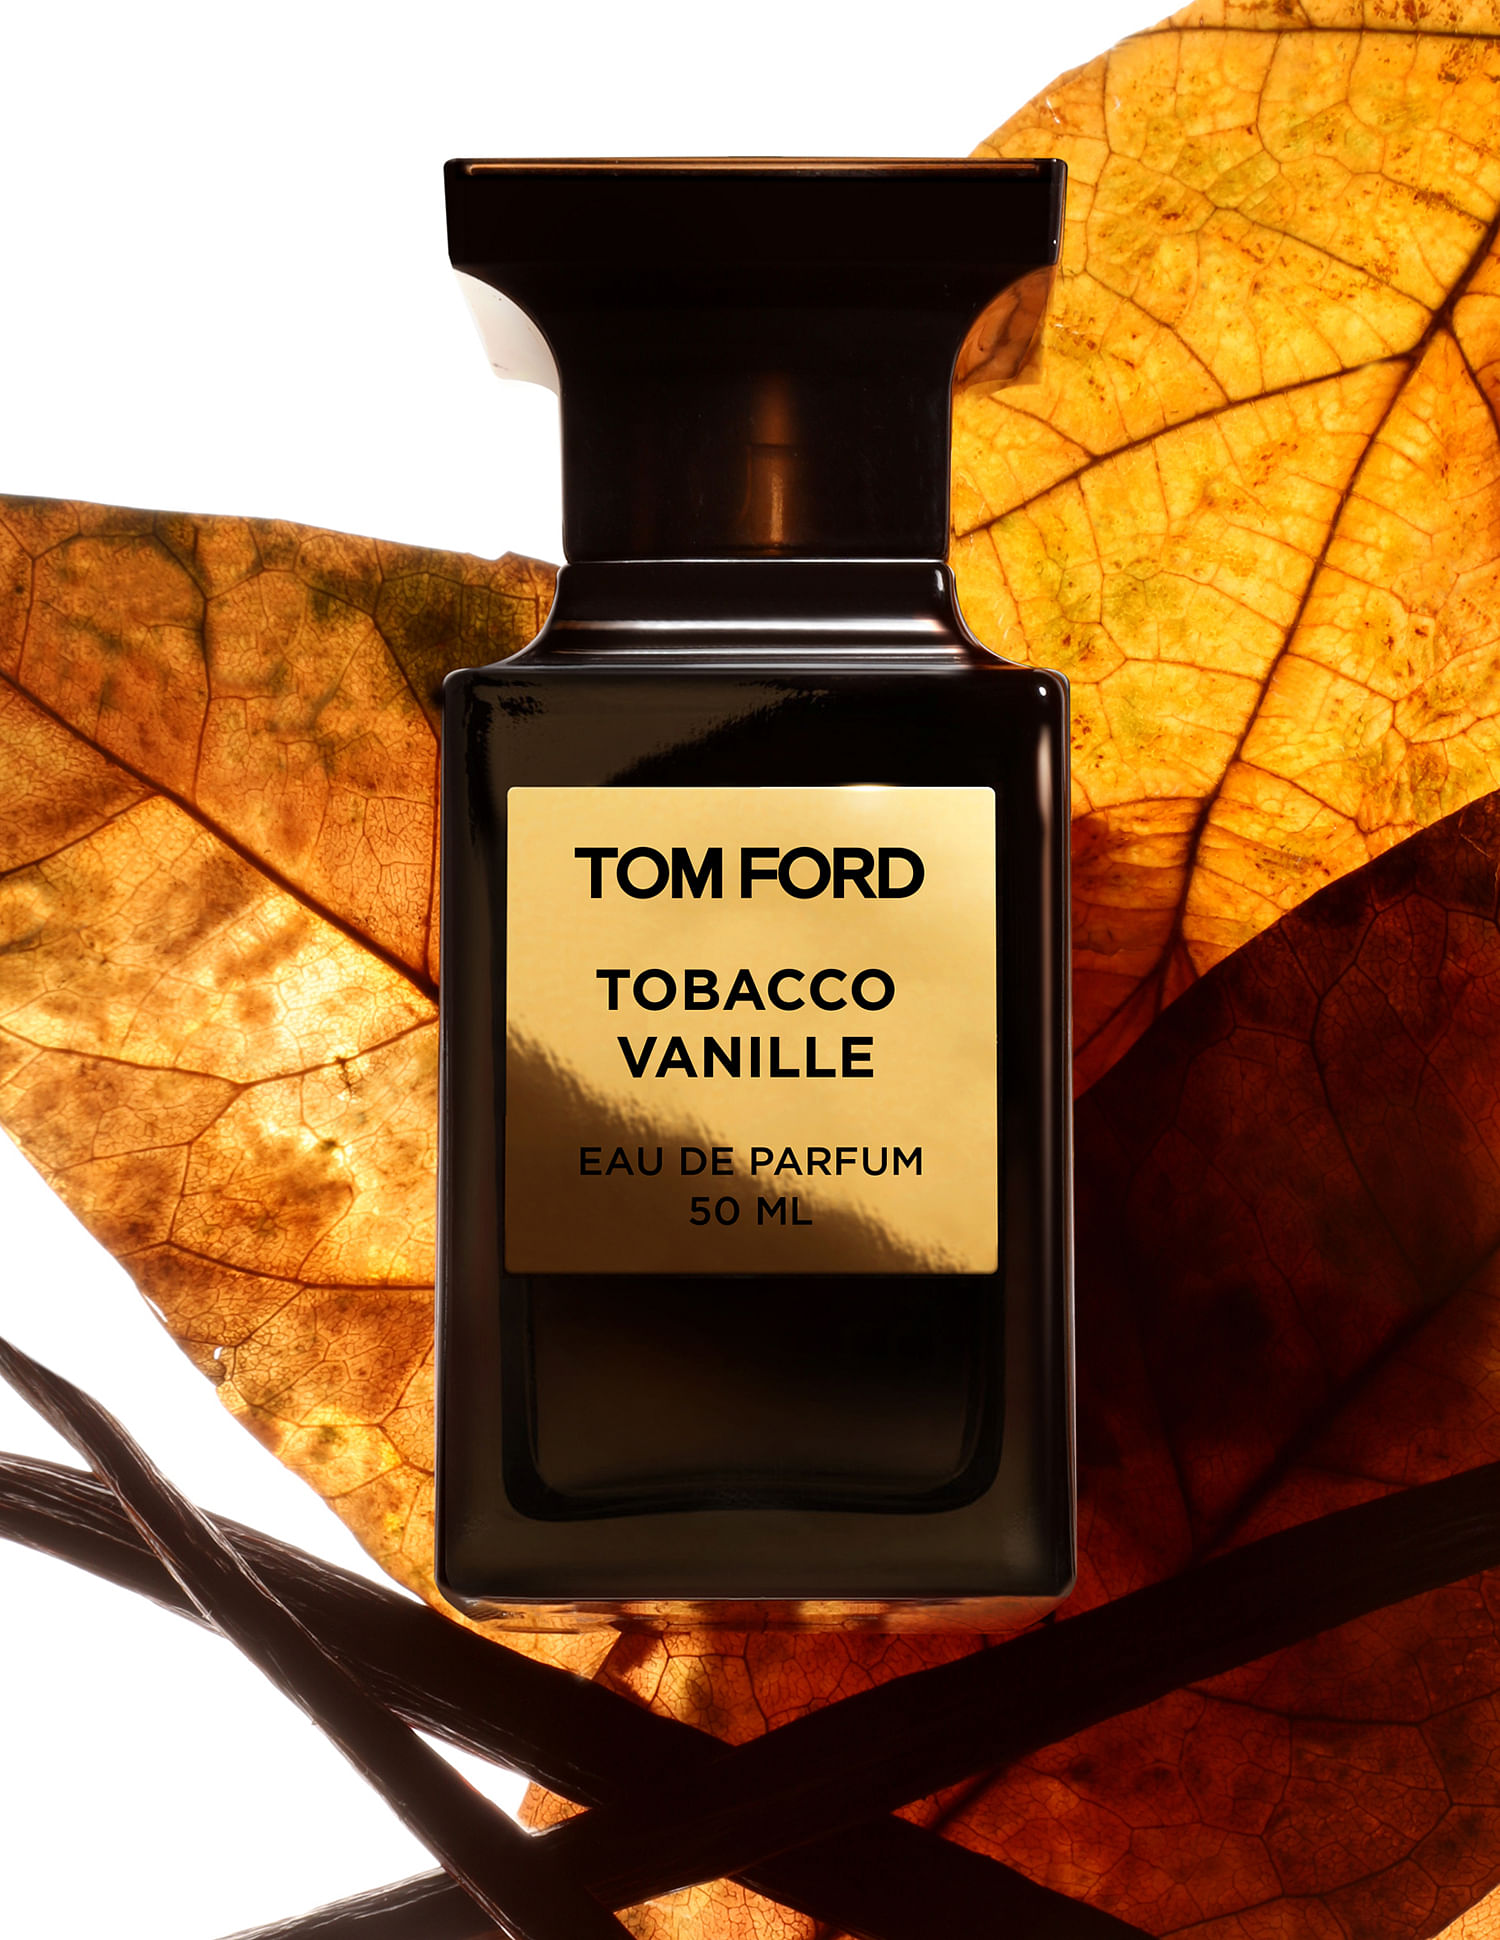 Tom Ford Tobacco Vanille Unisex Eau De Parfum Spray - 3.4 fl oz bottle